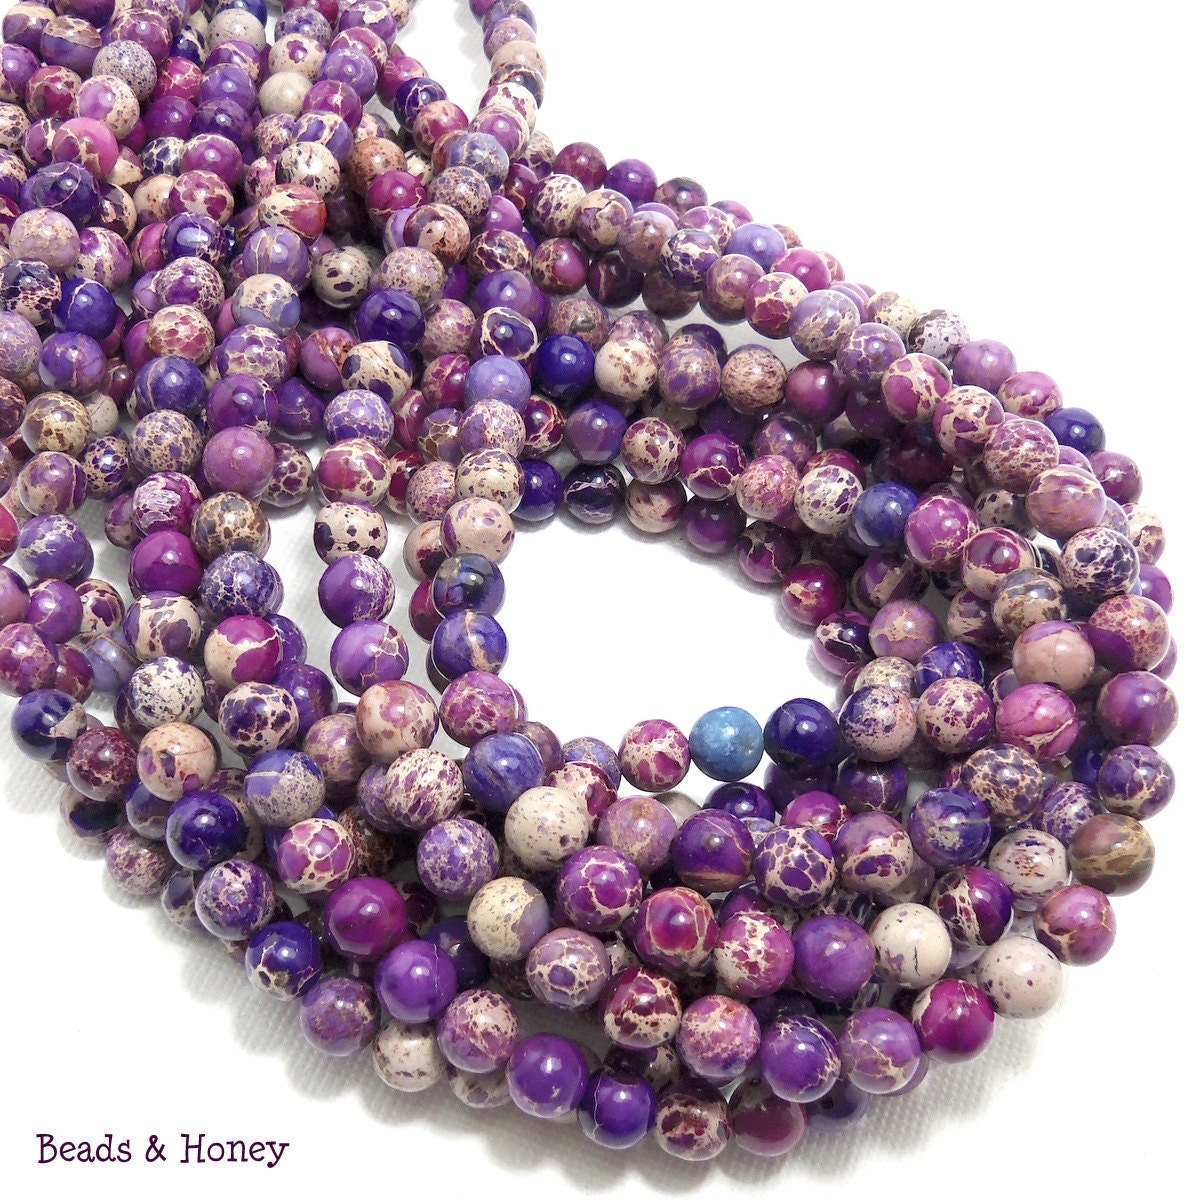 Impression Stone, Purple, Mixed, Gemstone Beads, Round, Smooth, 6mm, Small, 66pcs, Full-Strand - ID 1227 - BeadsAndHoney